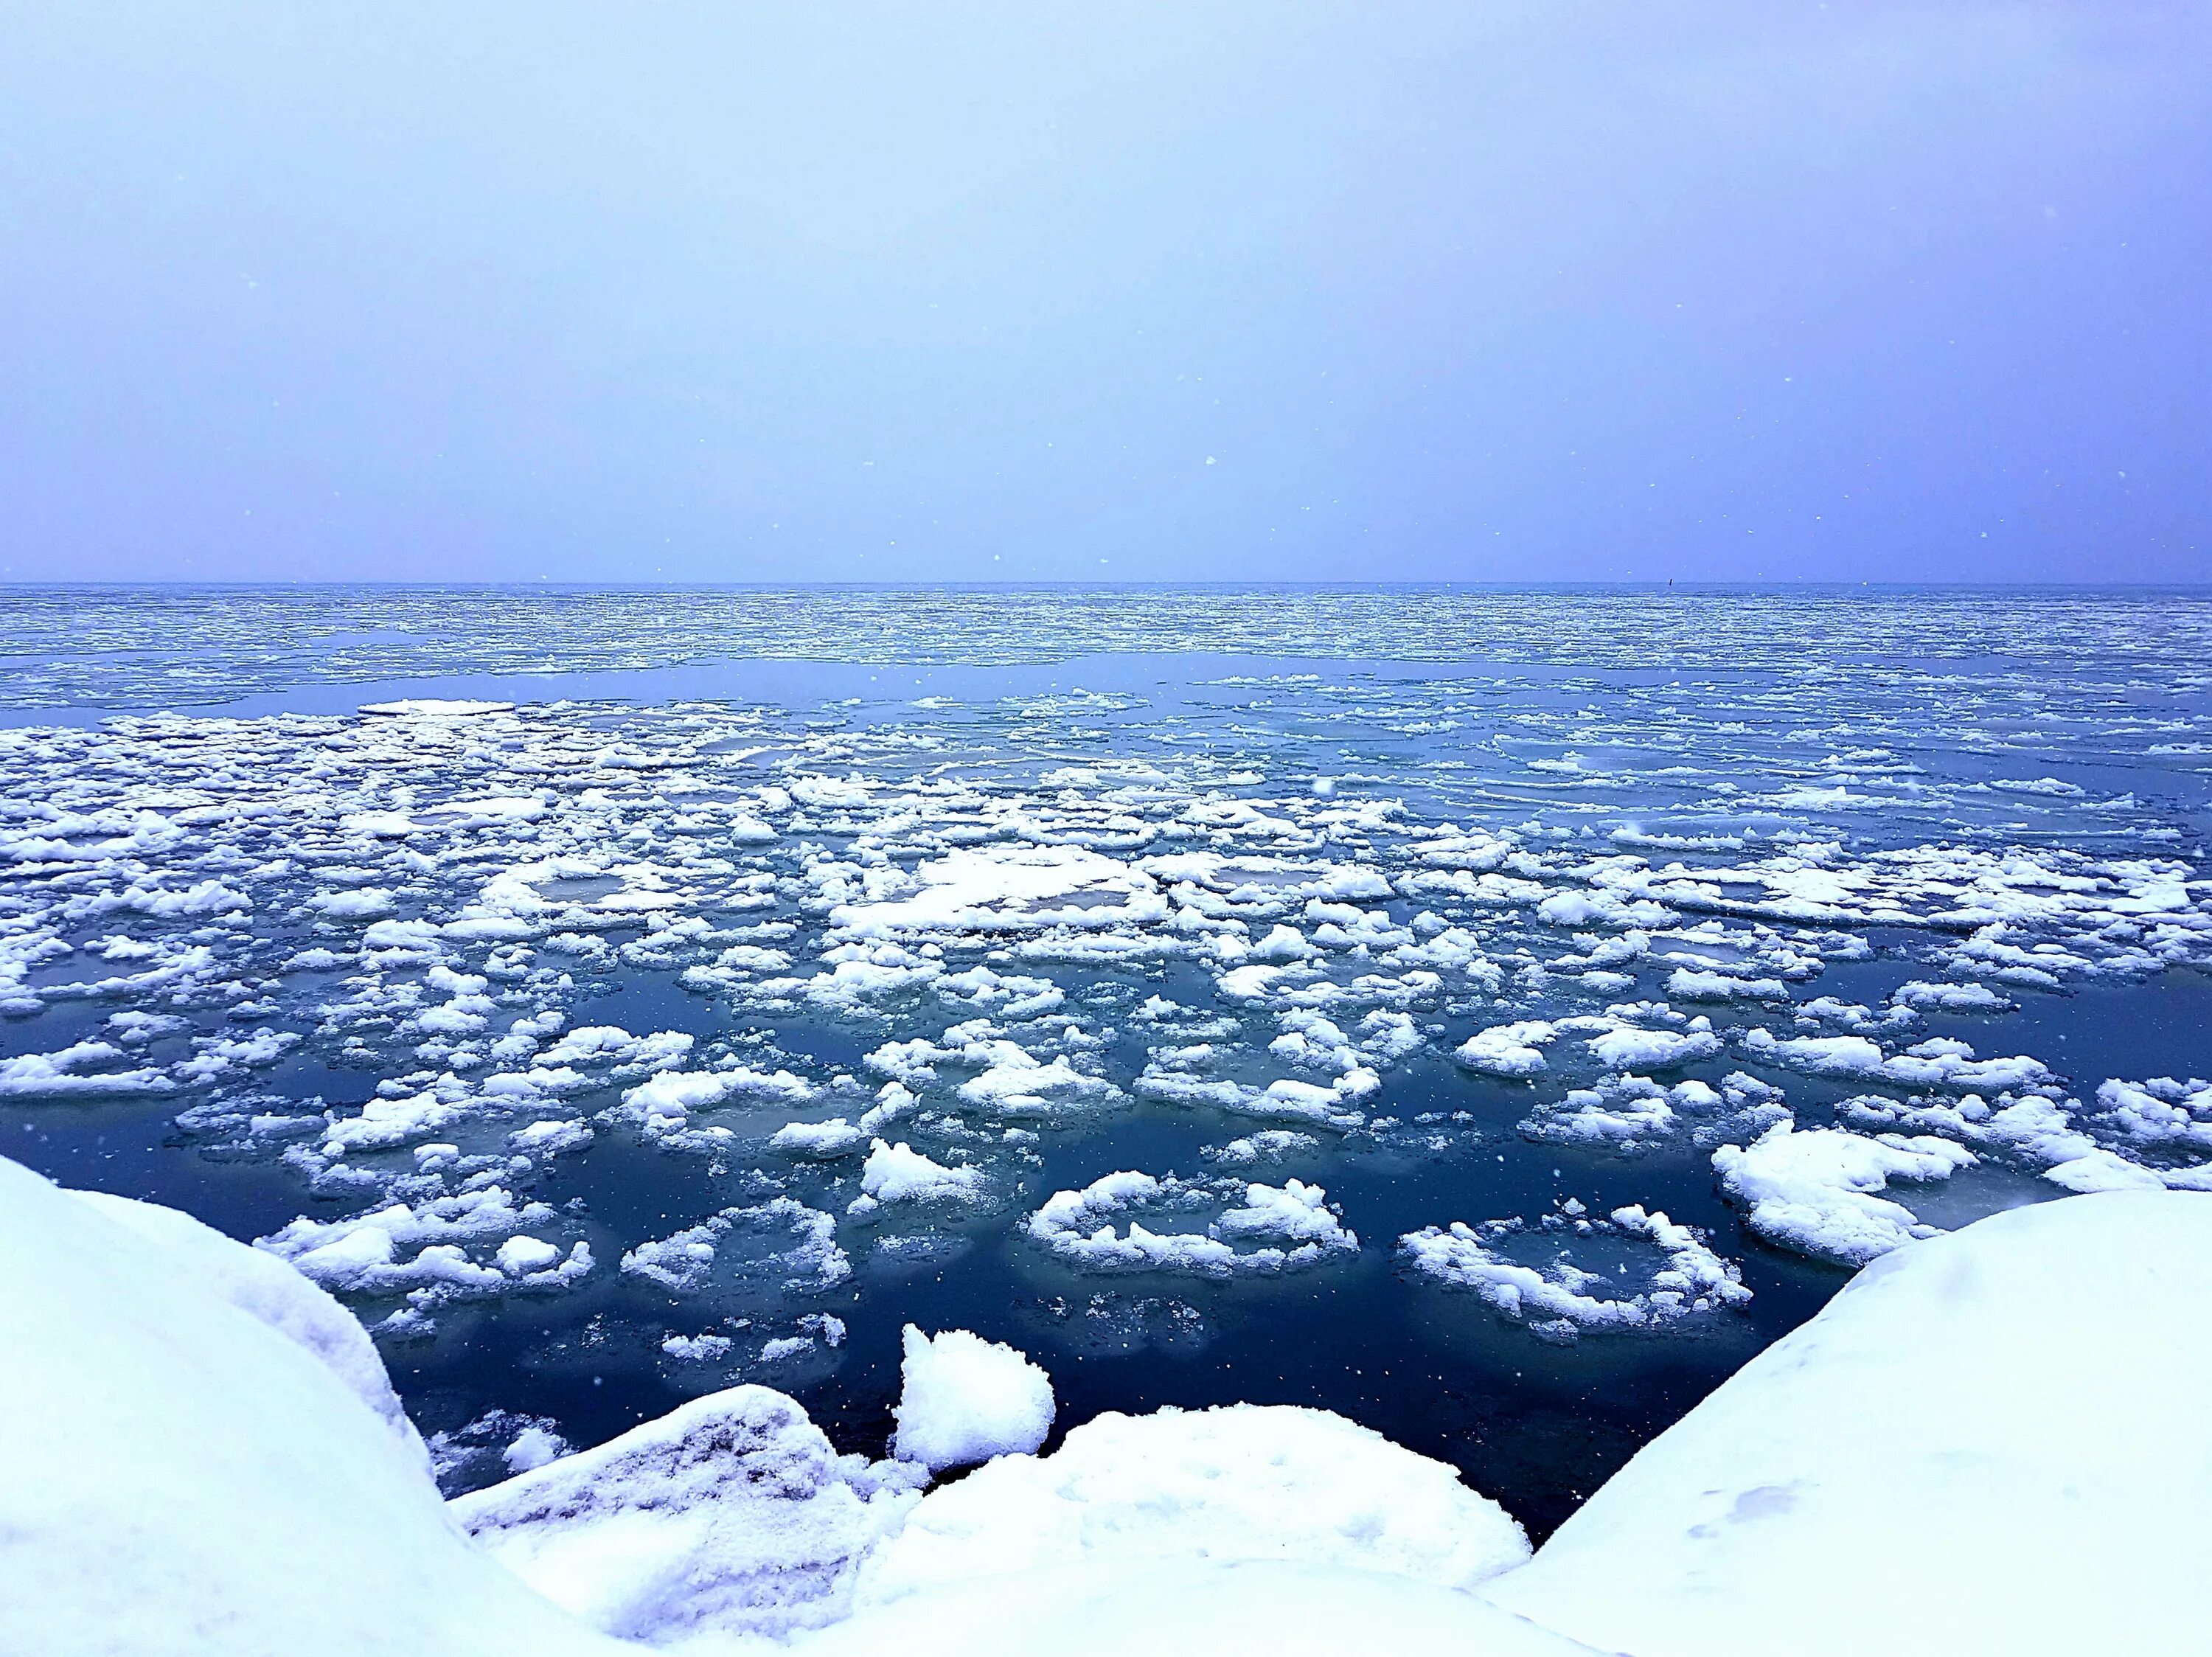 Пролет лед. Океан Северный Ледовитый океан. Северный Ледовитый океан лед море. Арктик Северный Ледовитый океан. Северно Ледовитый океан канадский архипелаг.